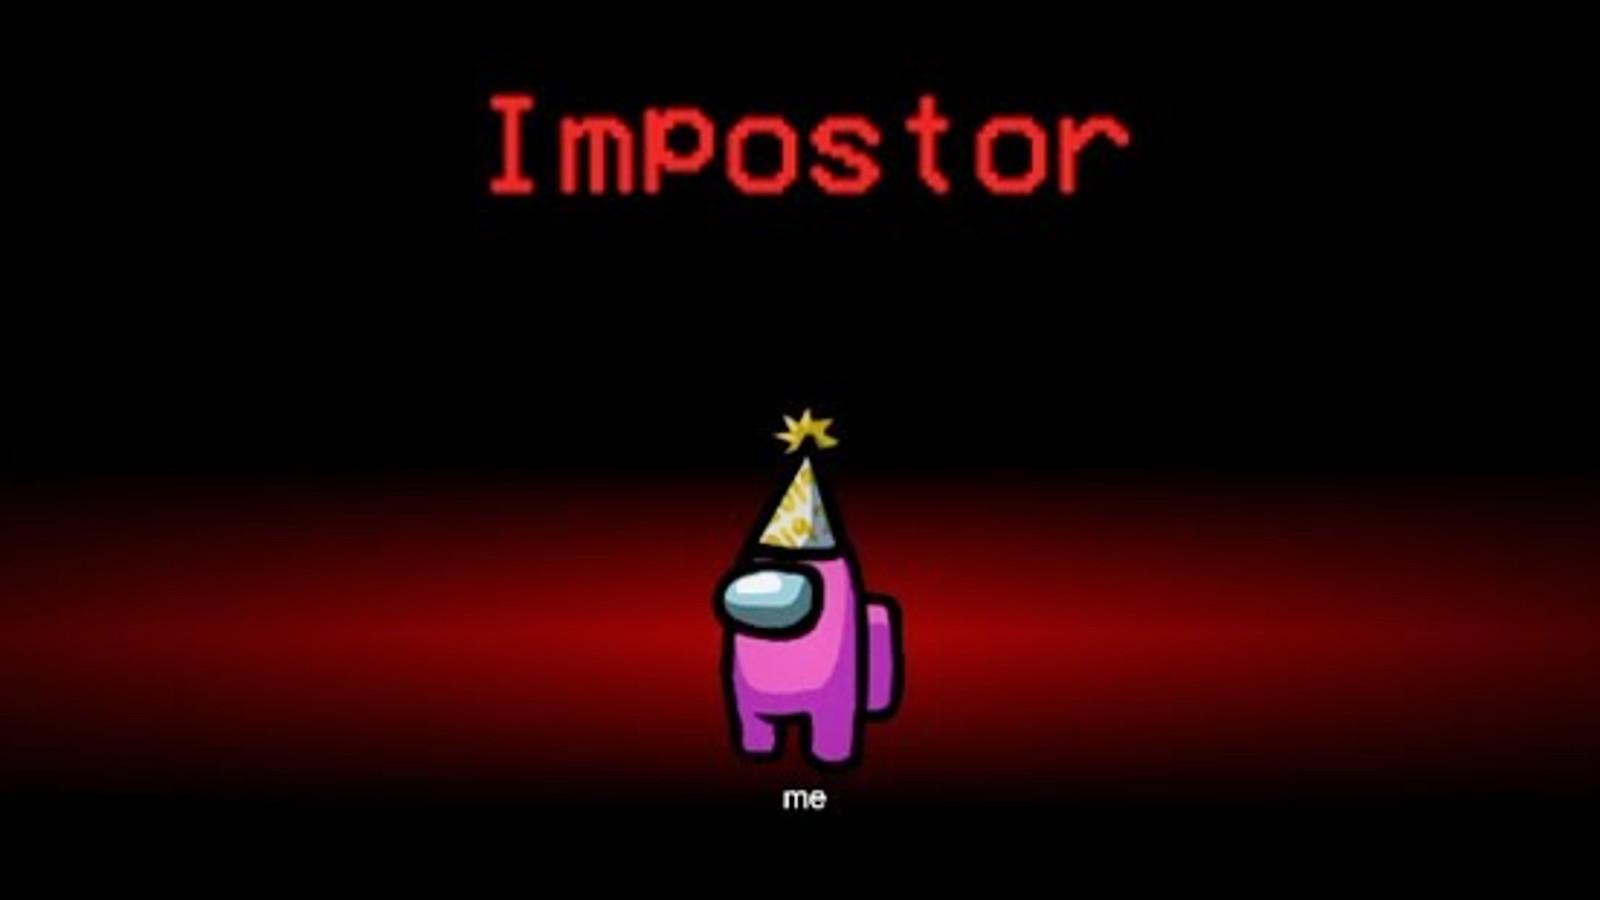 Among us 'Impostor' screen